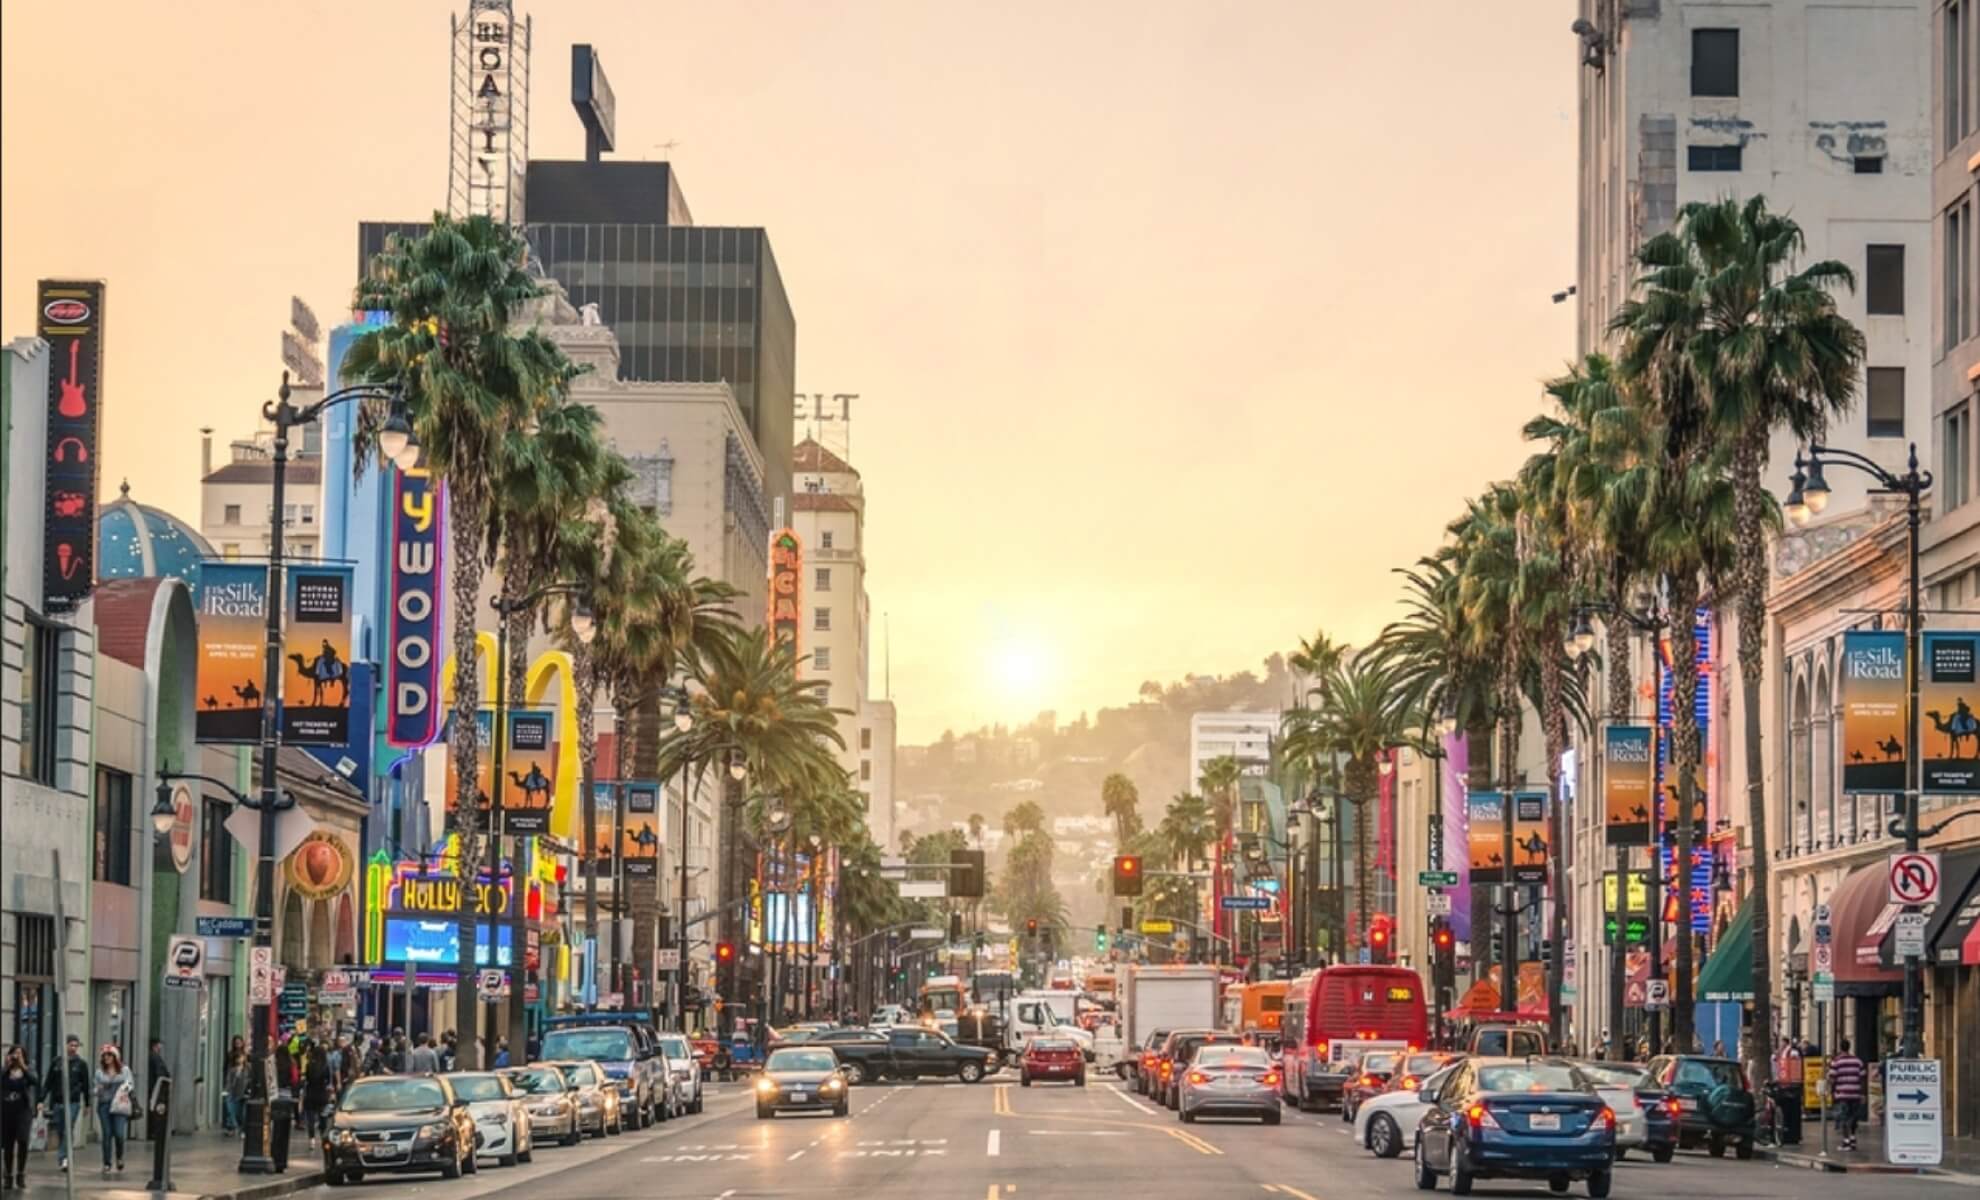 Le Hollywood Boulevard, Los Angeles